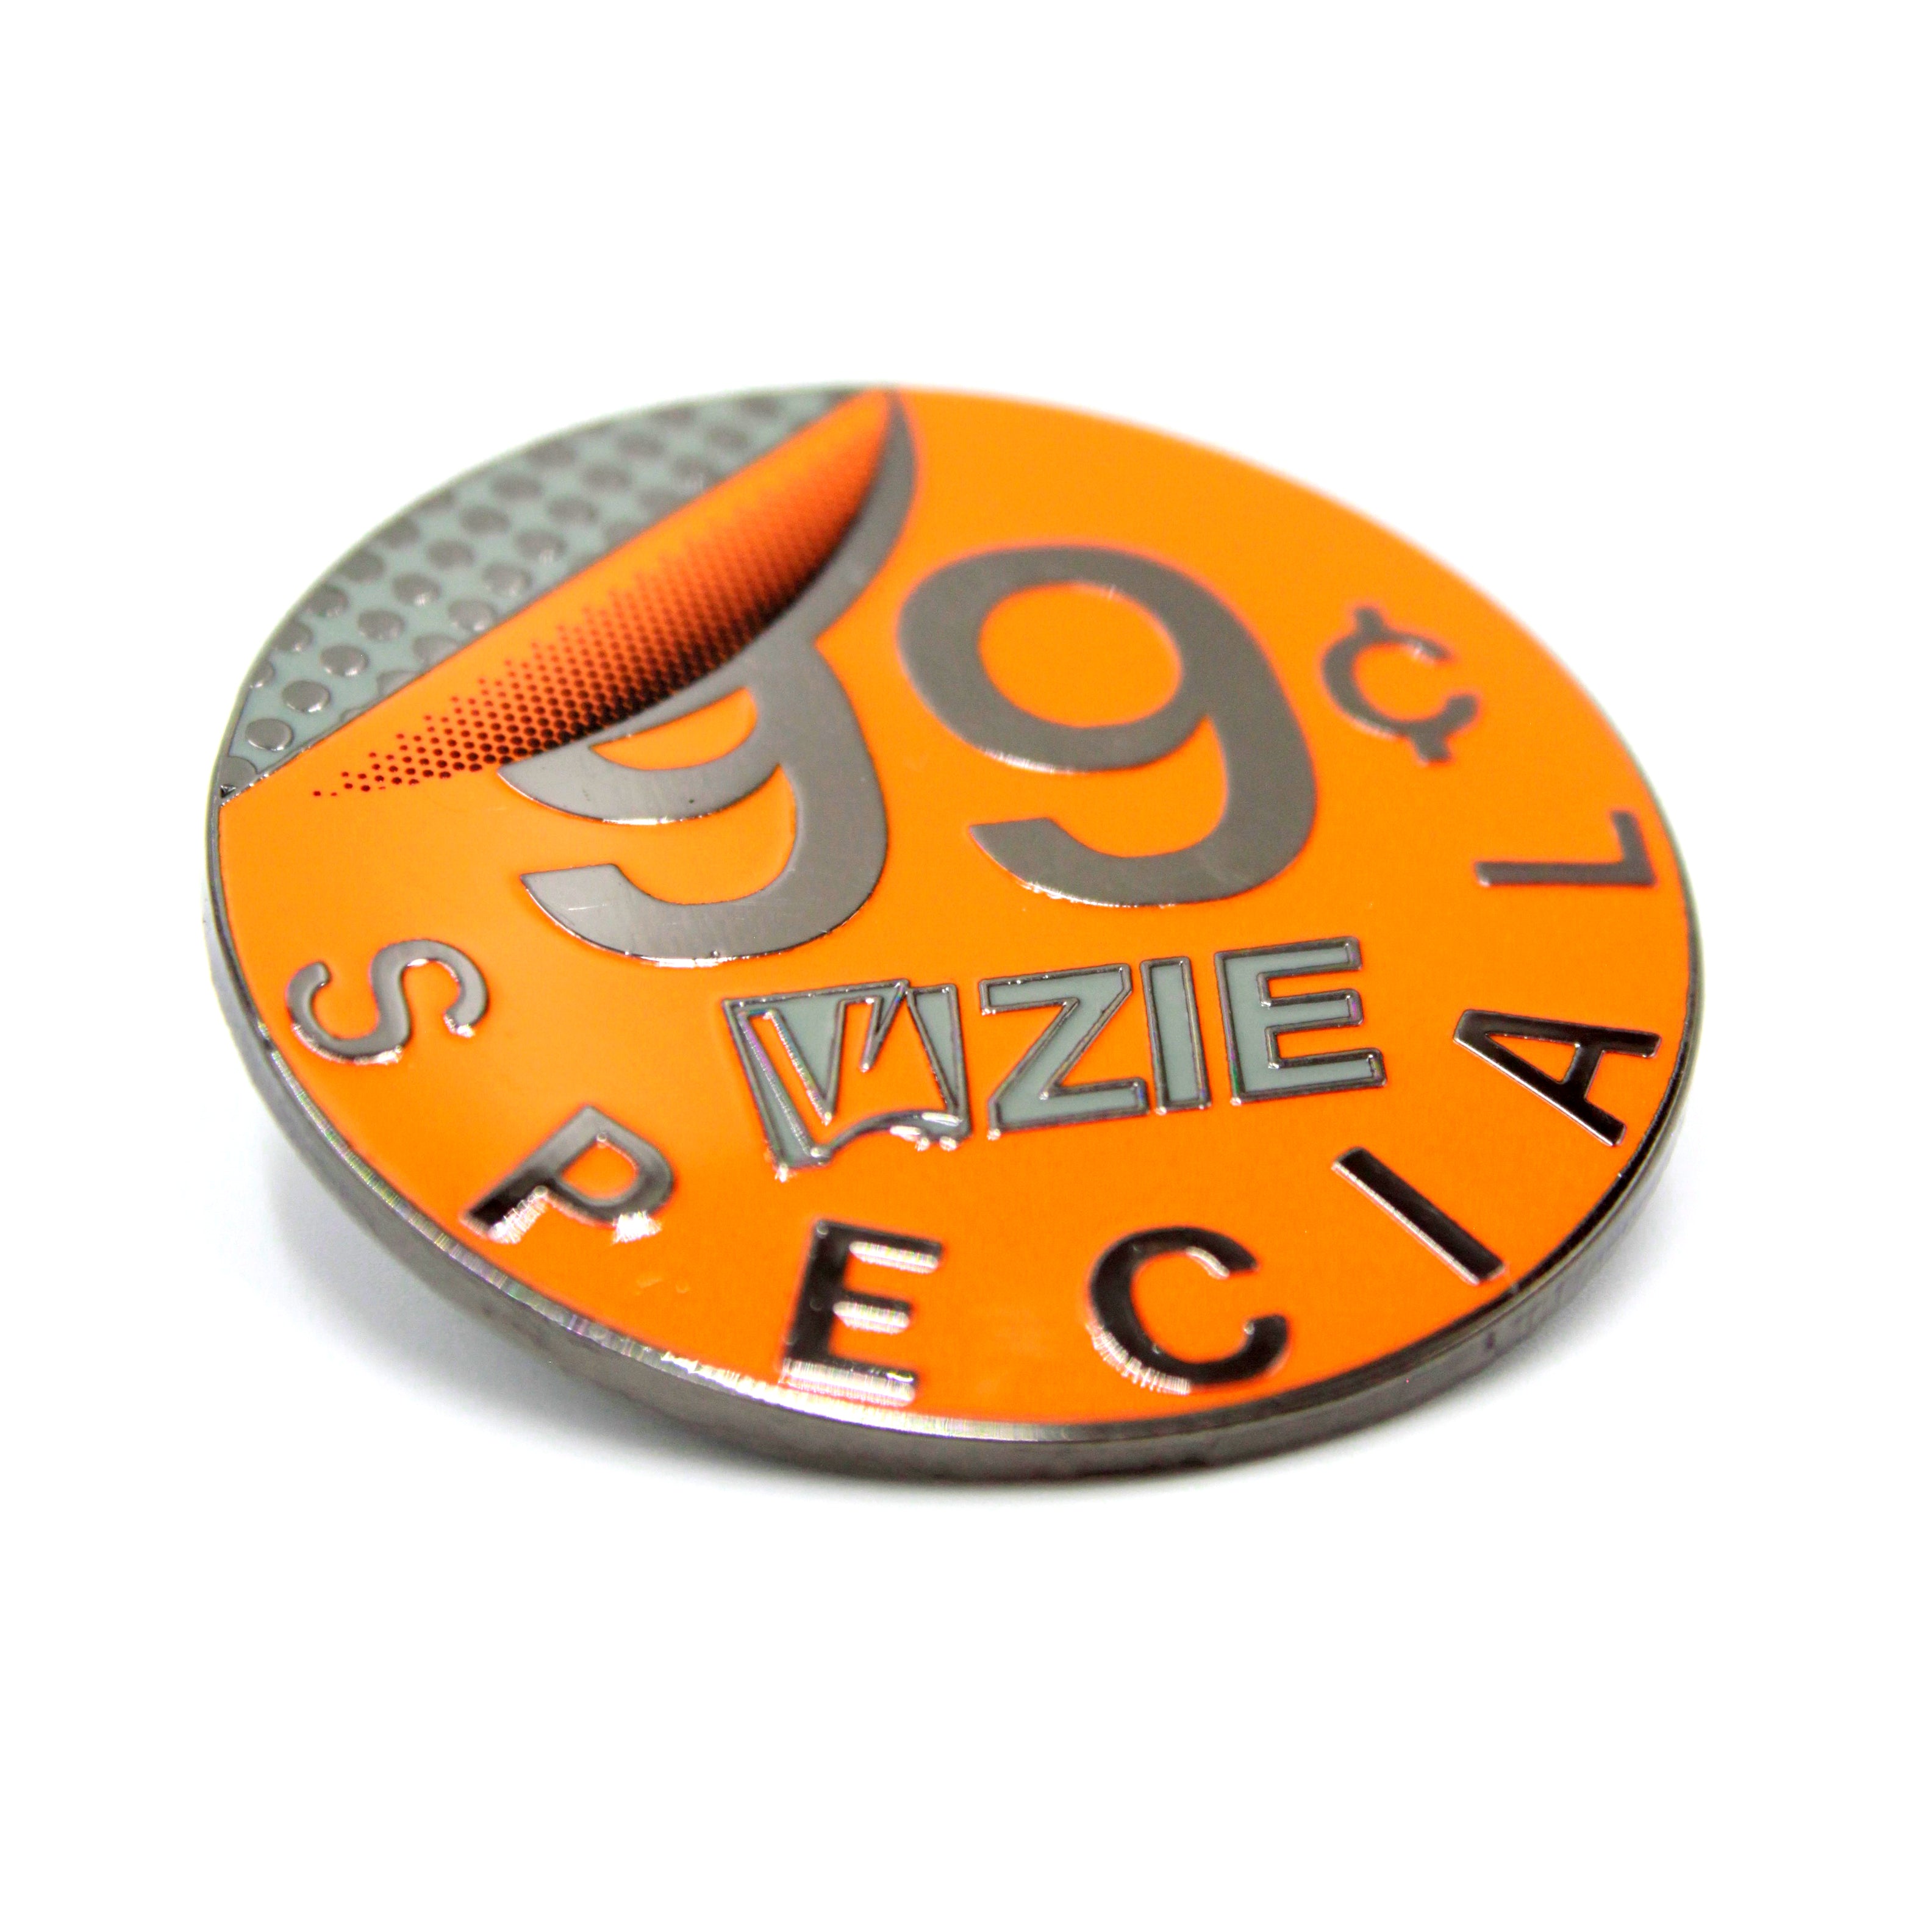 VIZIE - 99 CENT SPECIAL